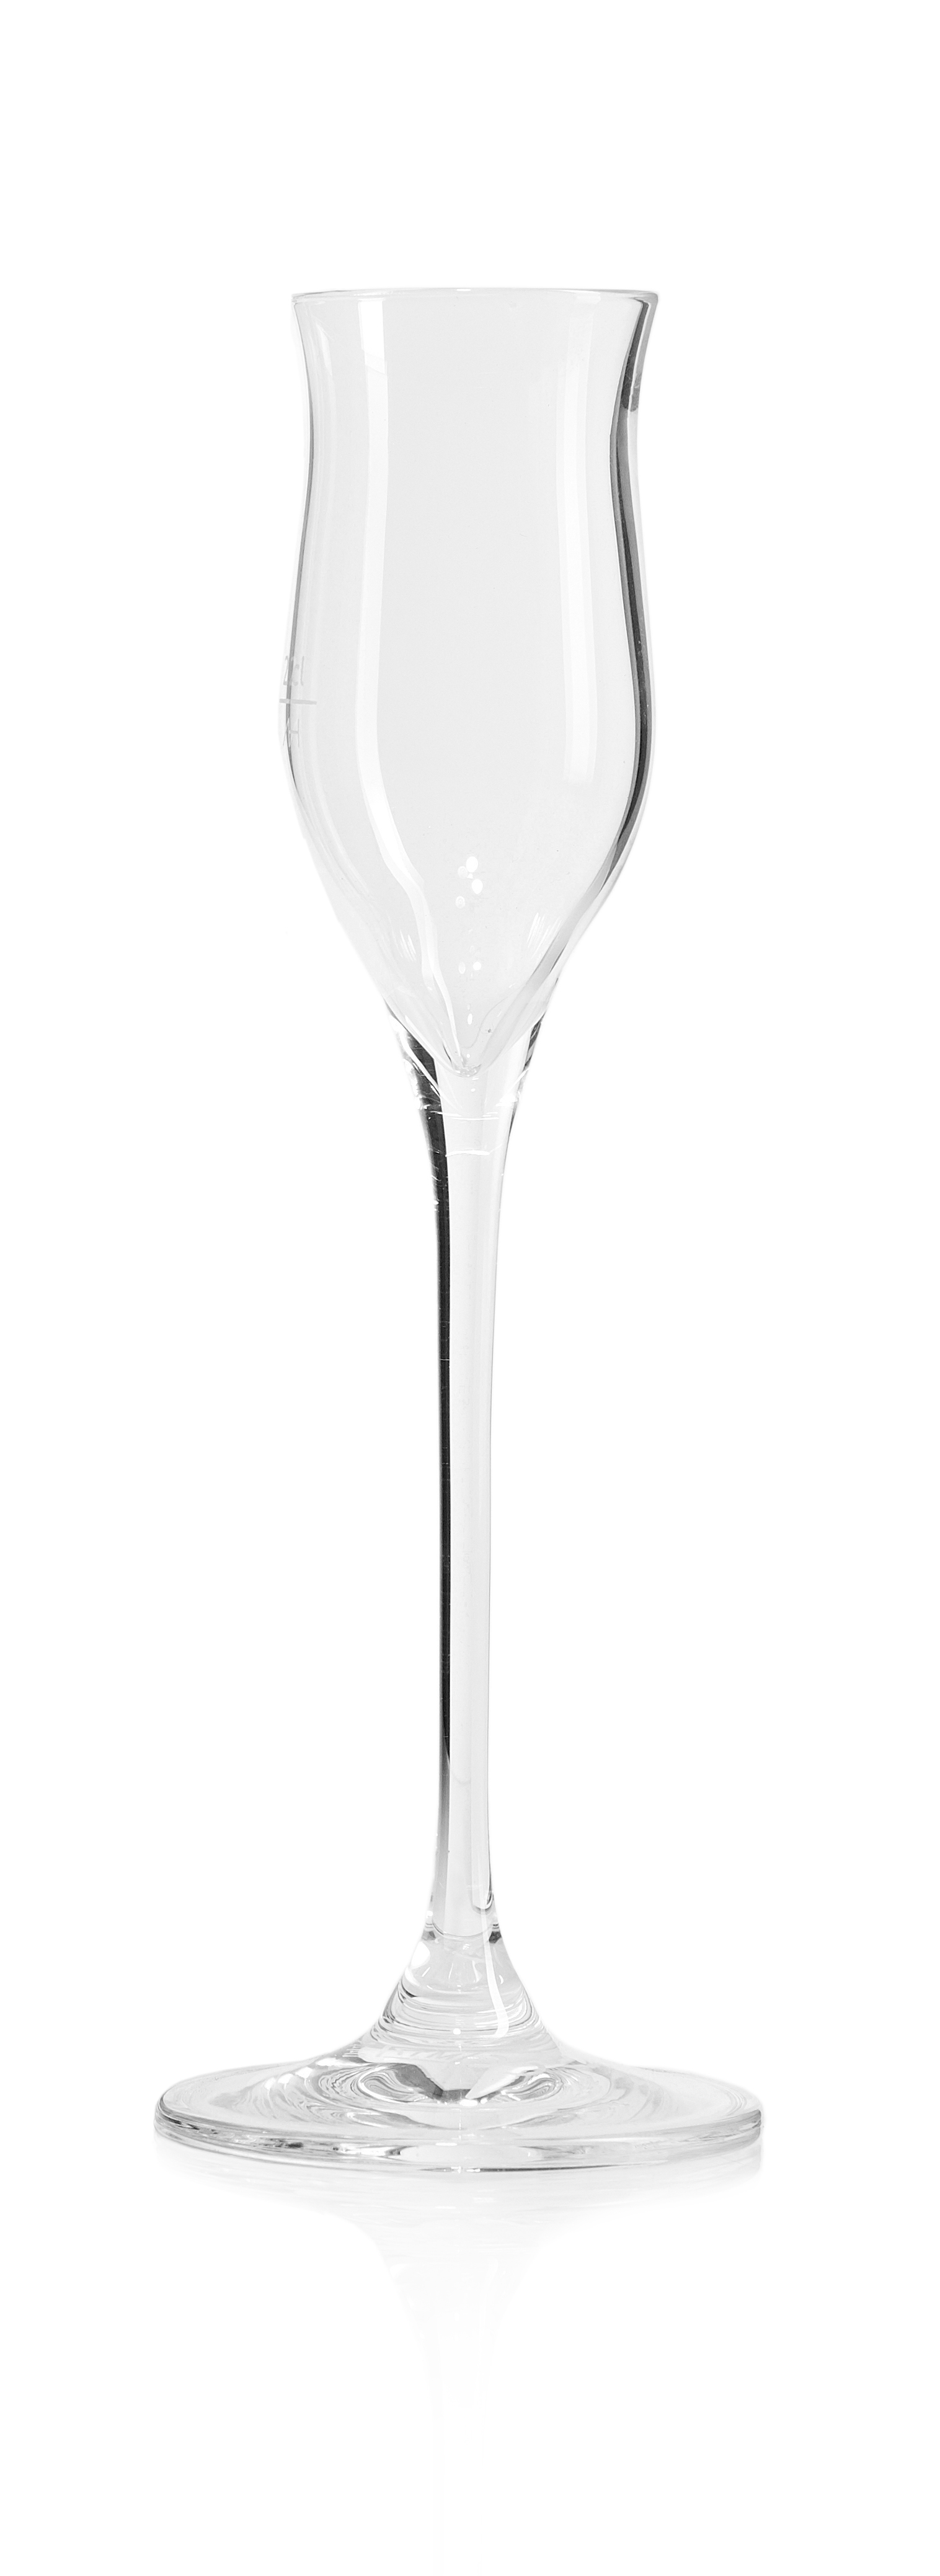 Reisetbauer Edelbrandglas